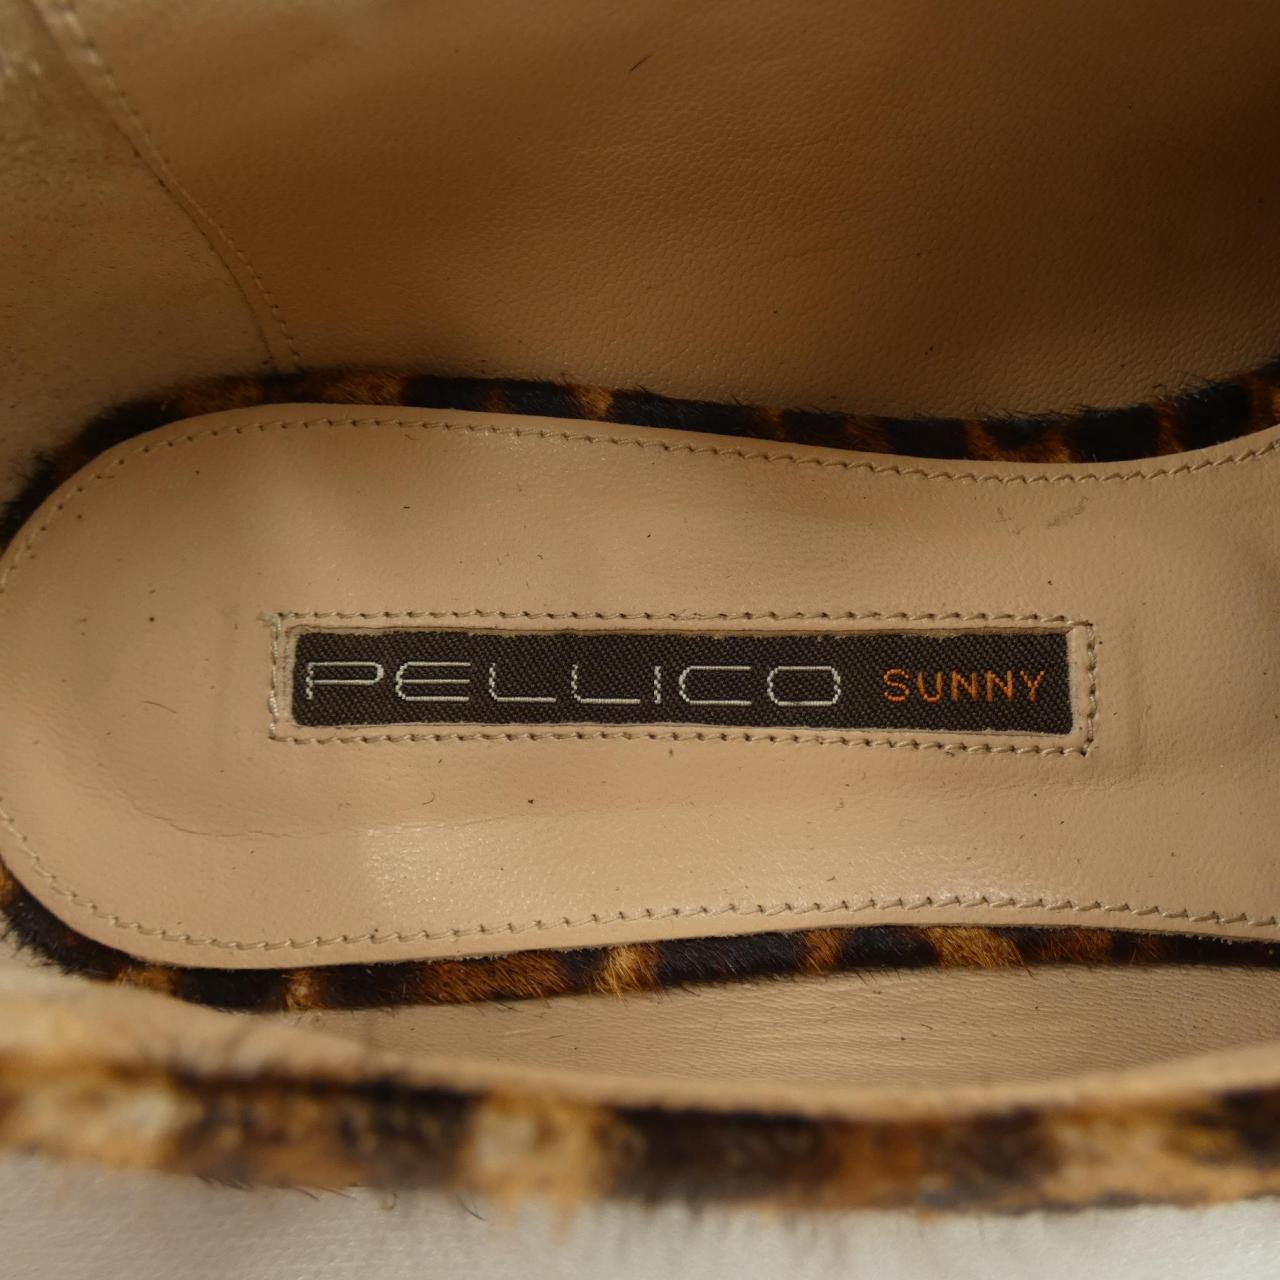 PELLICO SUNNY shoes